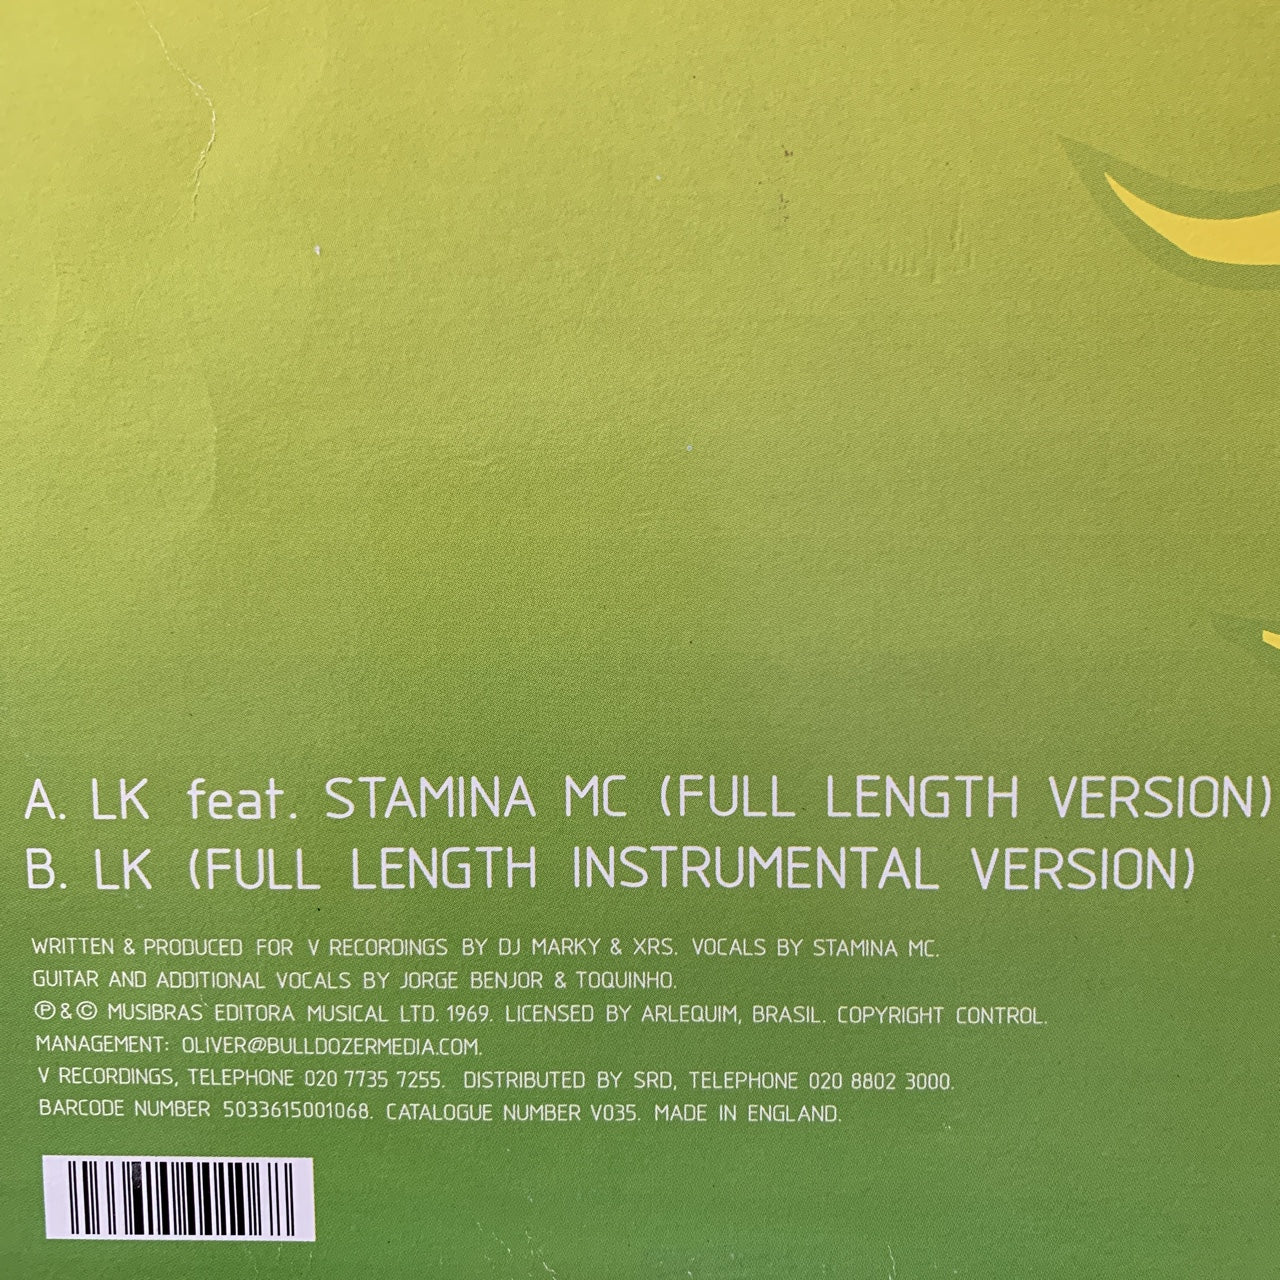 Di Marky & XRS “LK” Feat Stamina MC